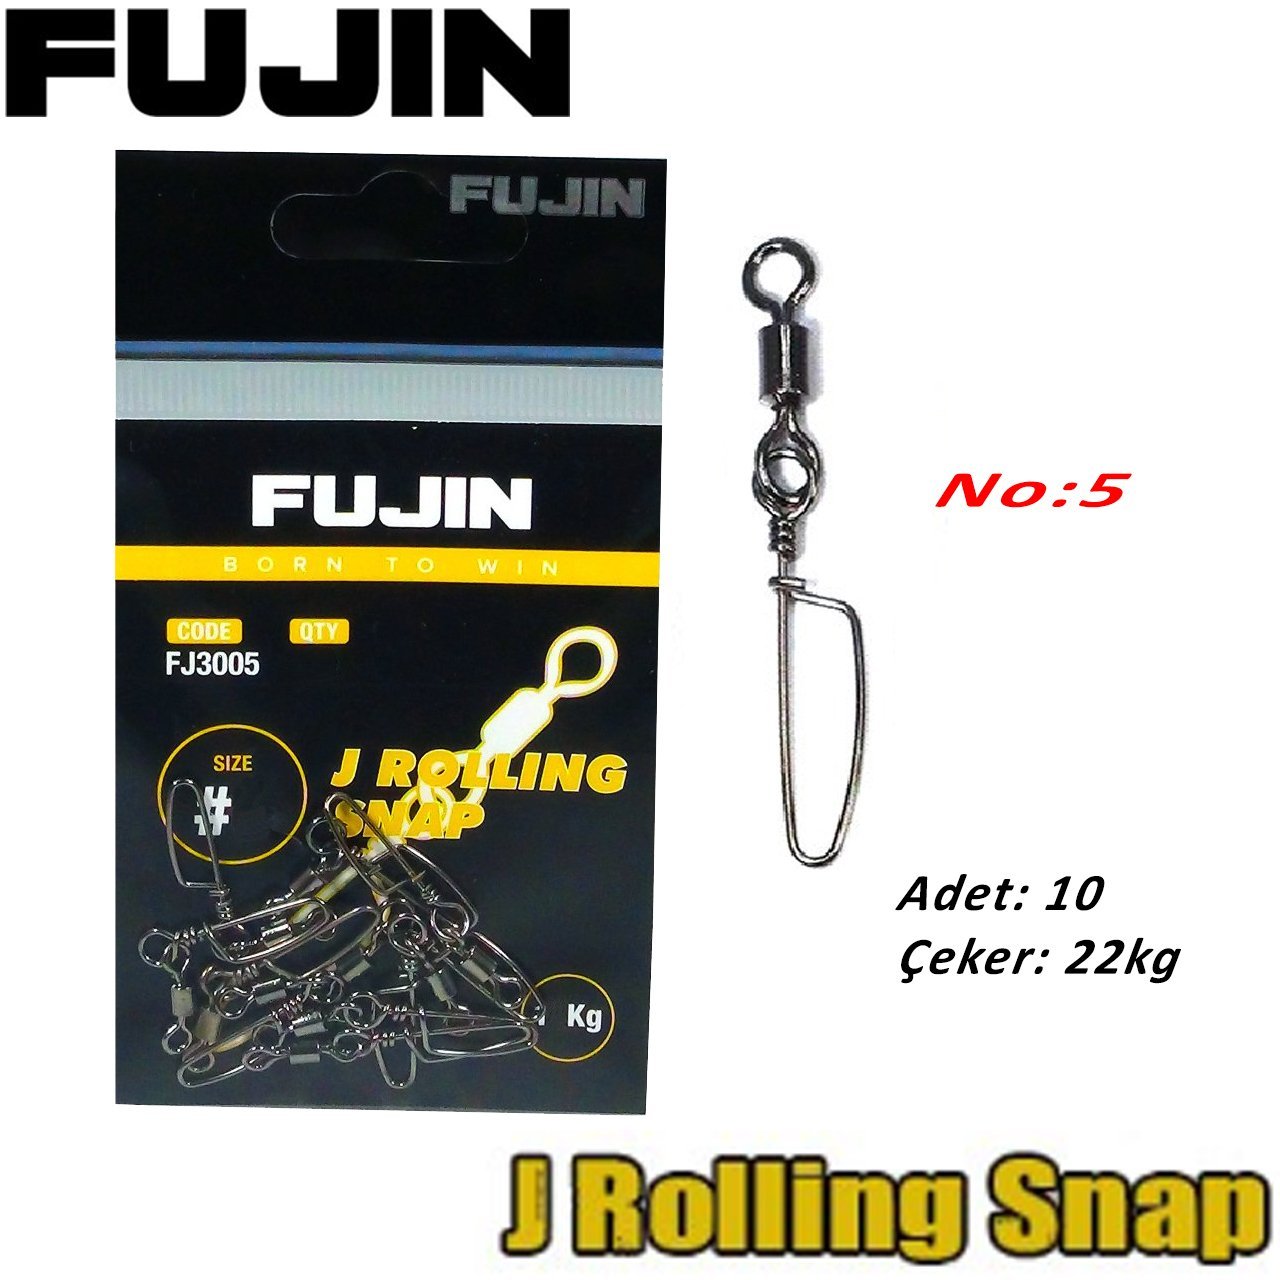 Fujin ''J ROLLING SNAP'' No:5 - 22kg